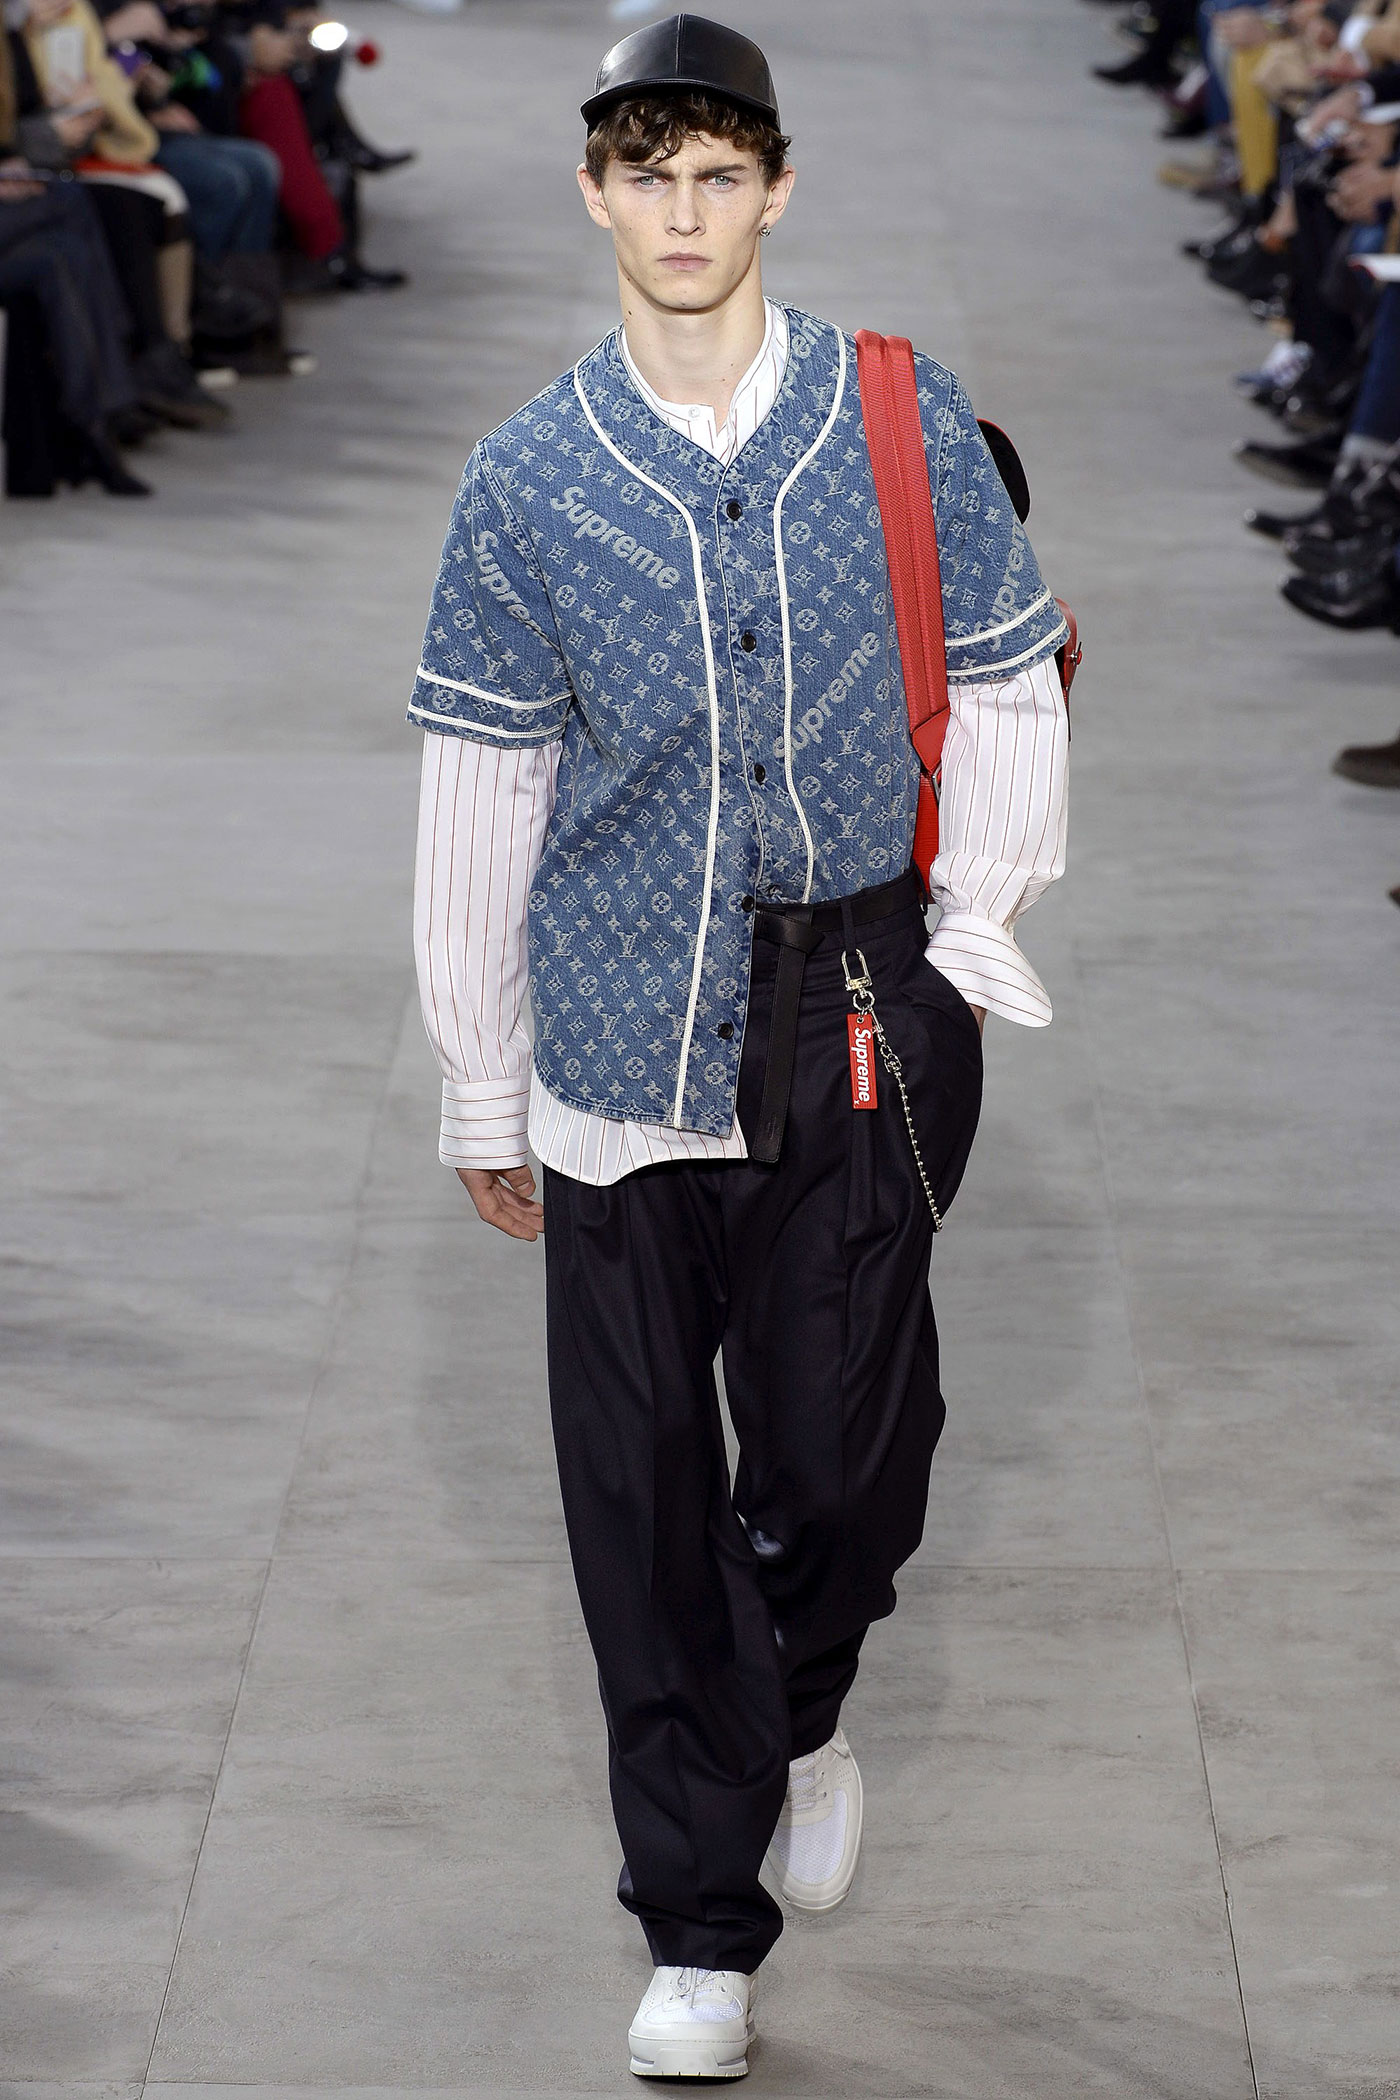 Travis Scott Wears Louis Vuitton x Supreme During Louis Vuitton